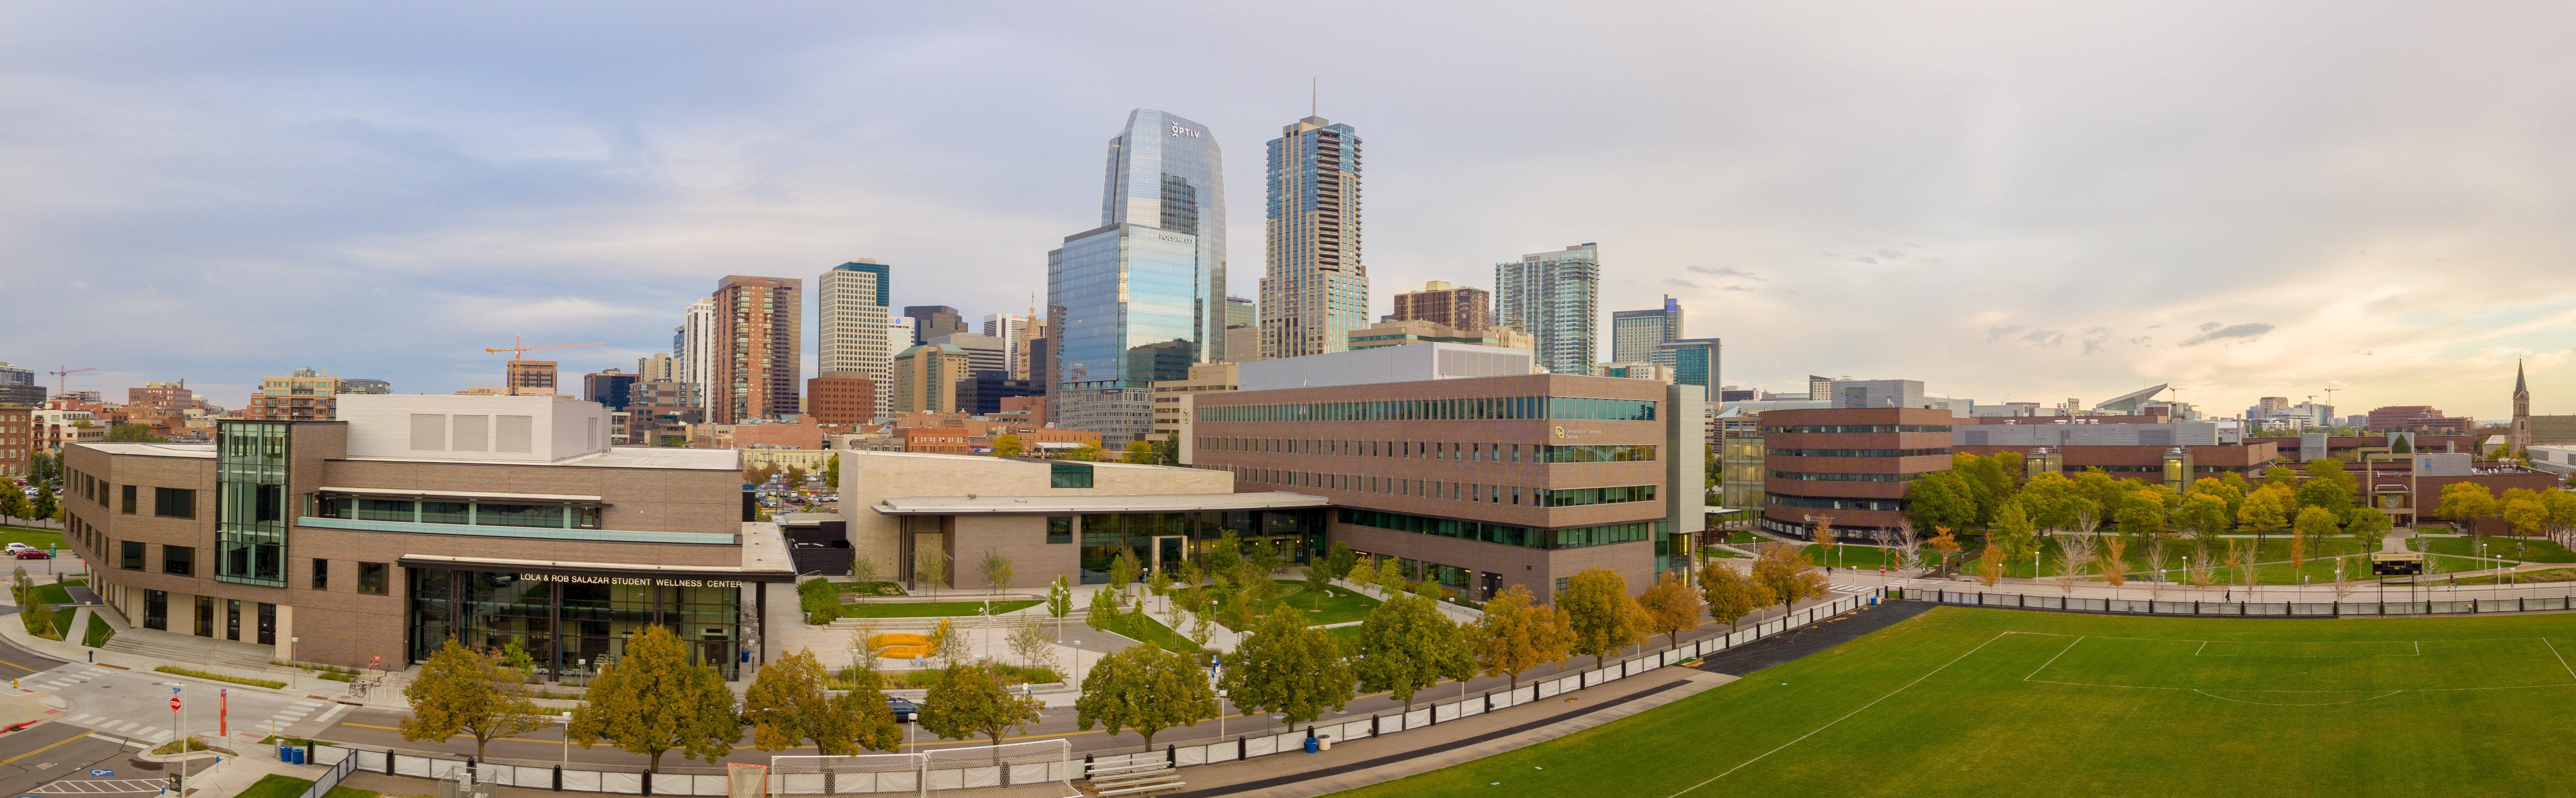 Scenic Campus View of the University of Colorado Denver Wallpaper